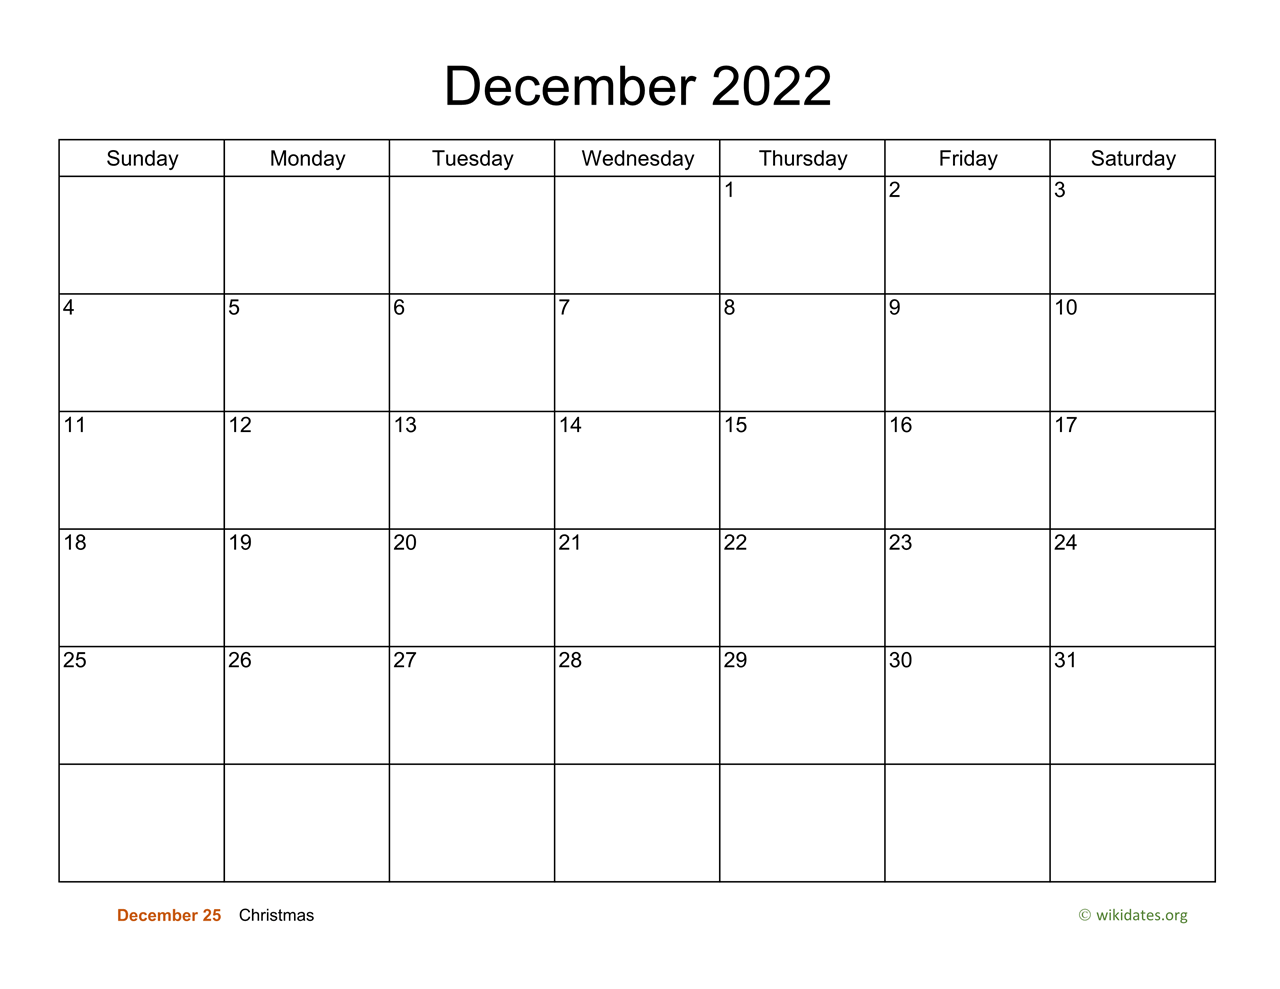 Dec 2022 Calendar Printable Basic Calendar For December 2022 | Wikidates.org